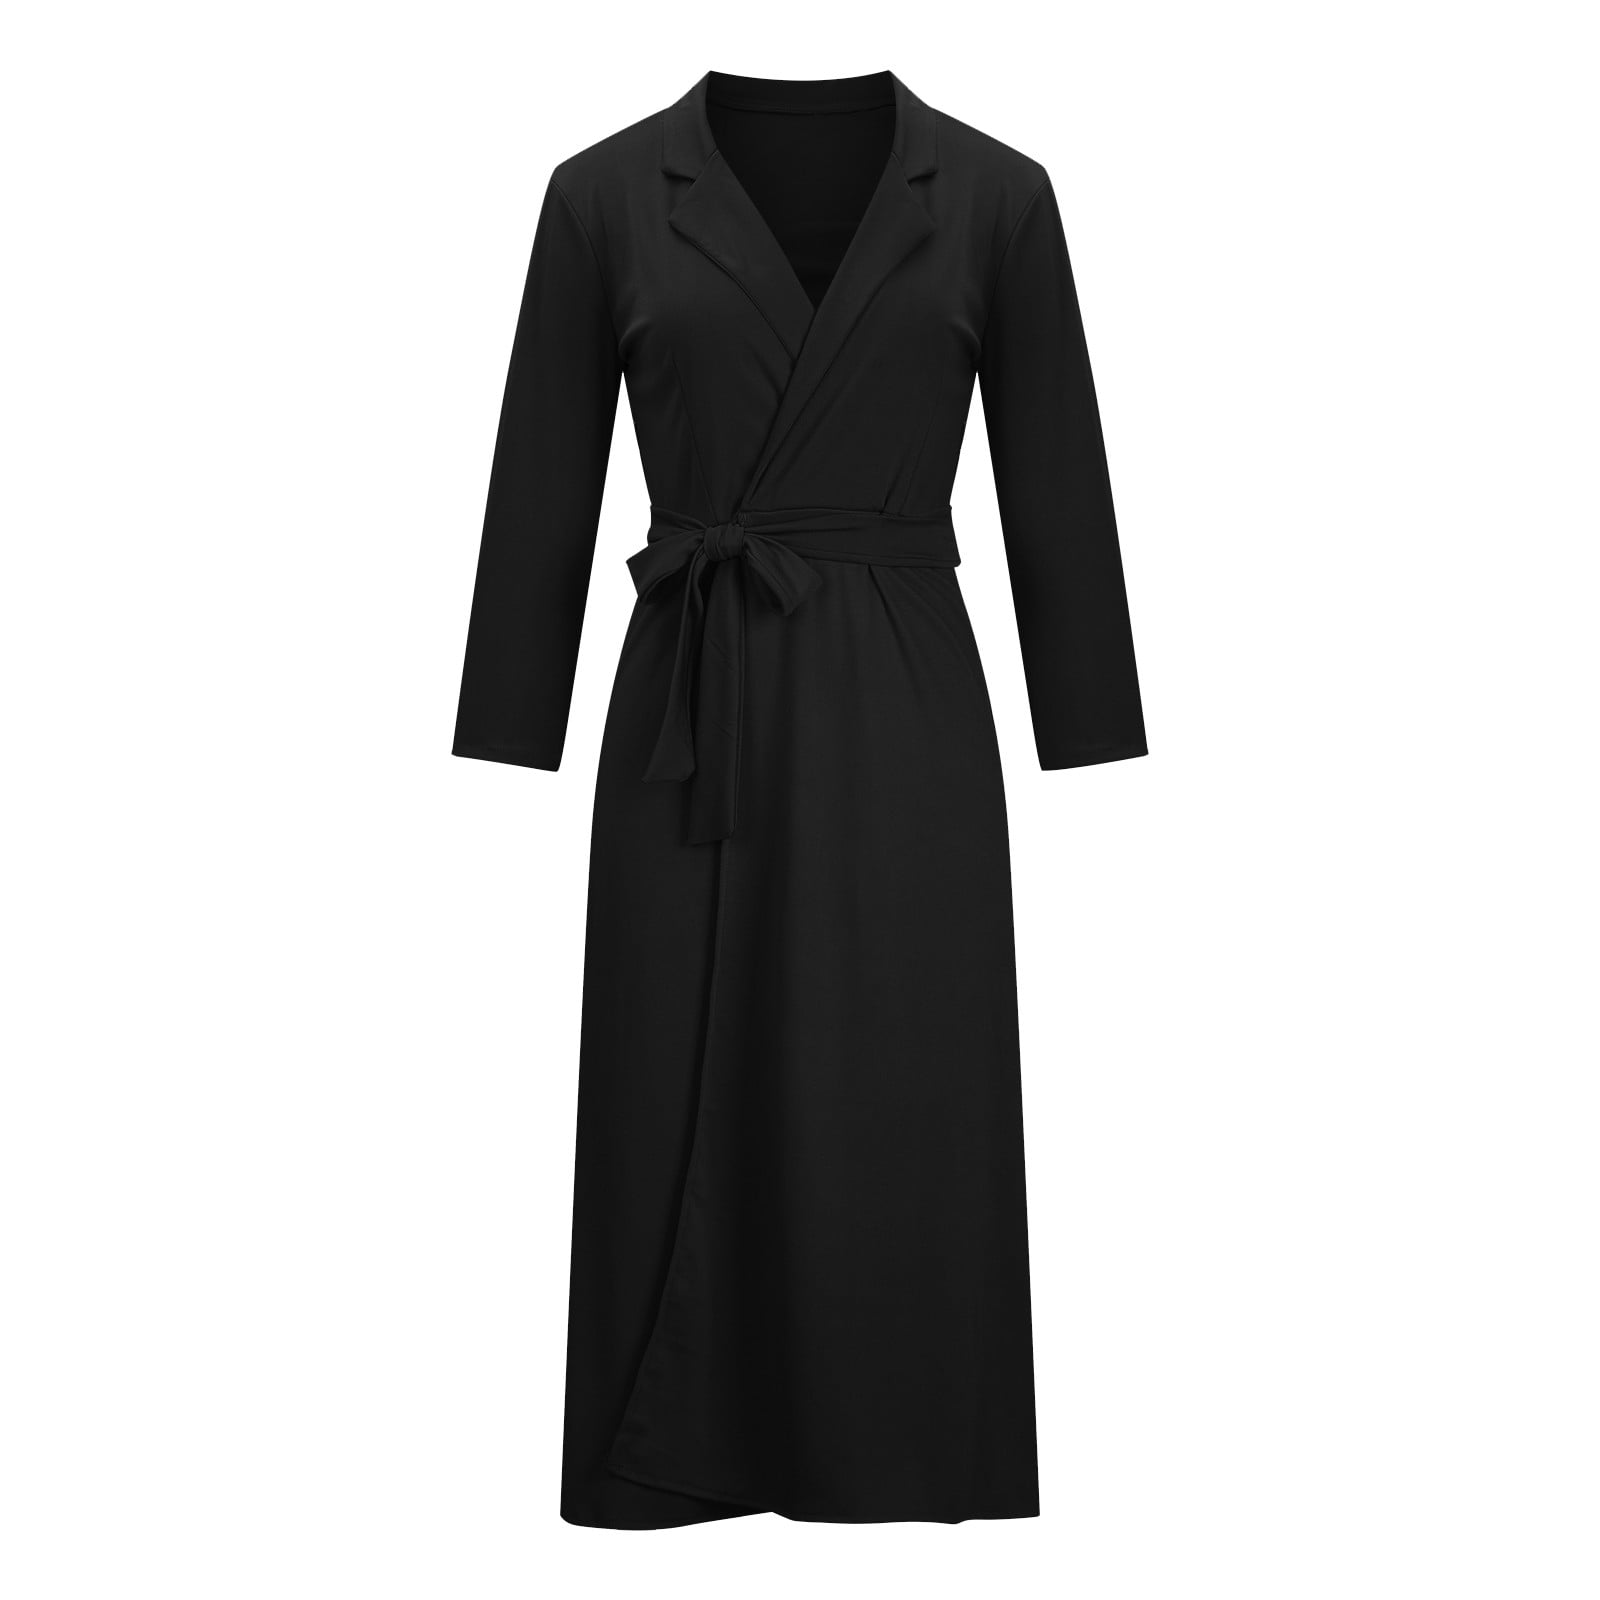 VKEKIEO Dresses That Hide Belly Fat Sun Dress Square Neckline Long Sleeve  Solid Black L 